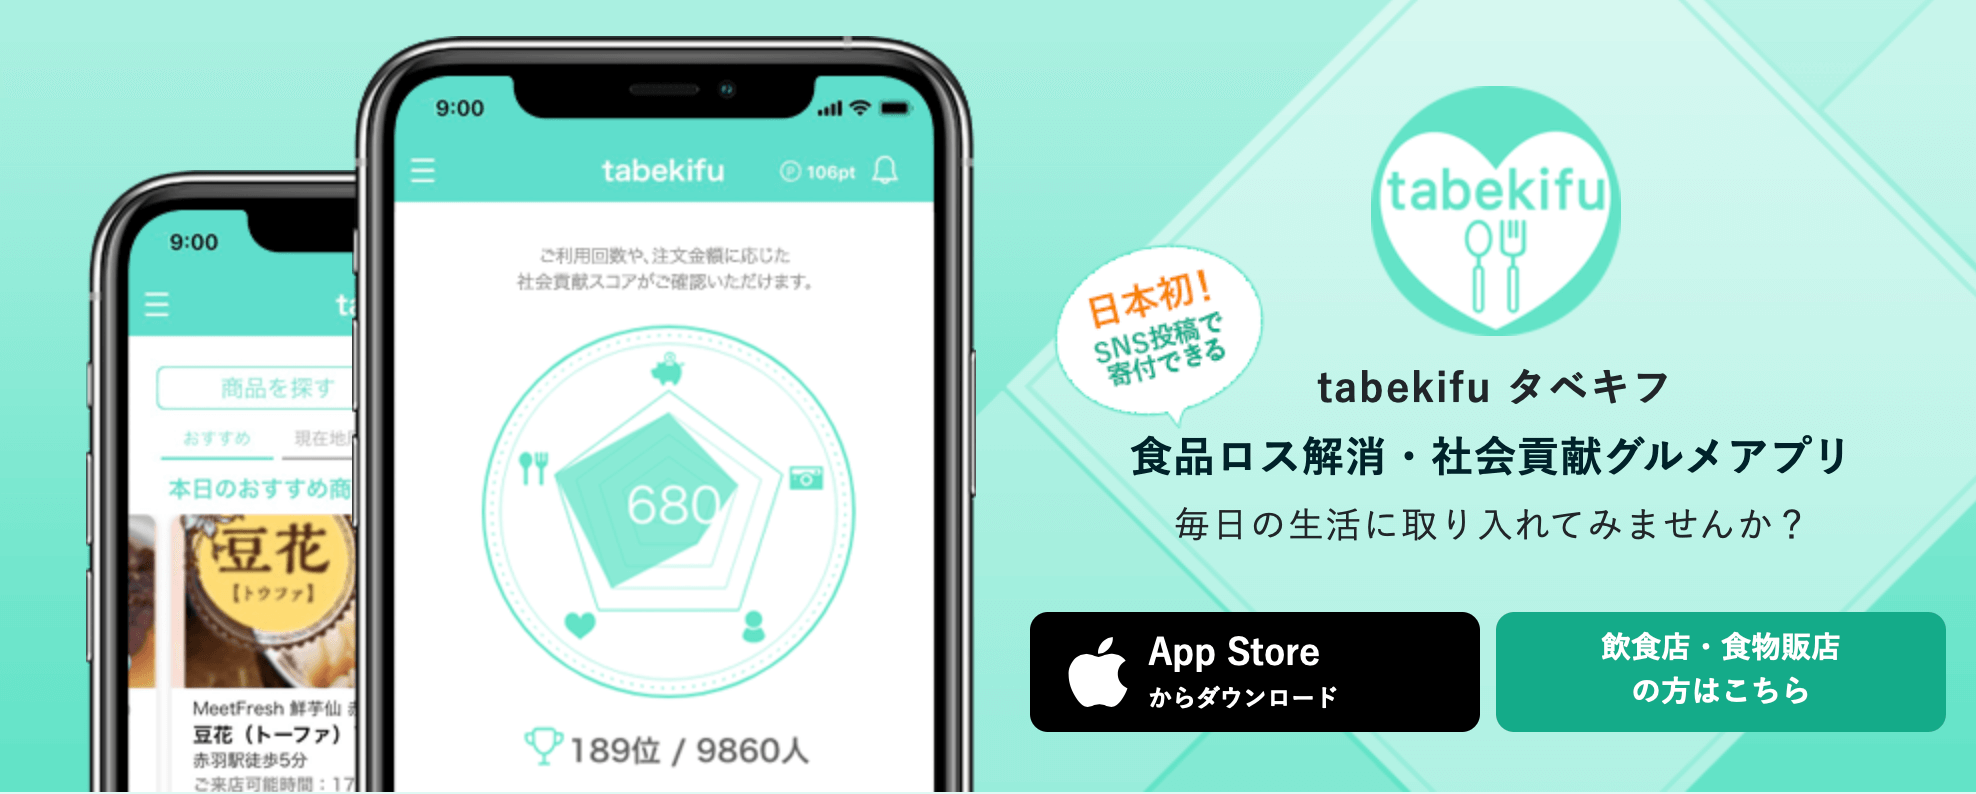 tabekifu 公式①